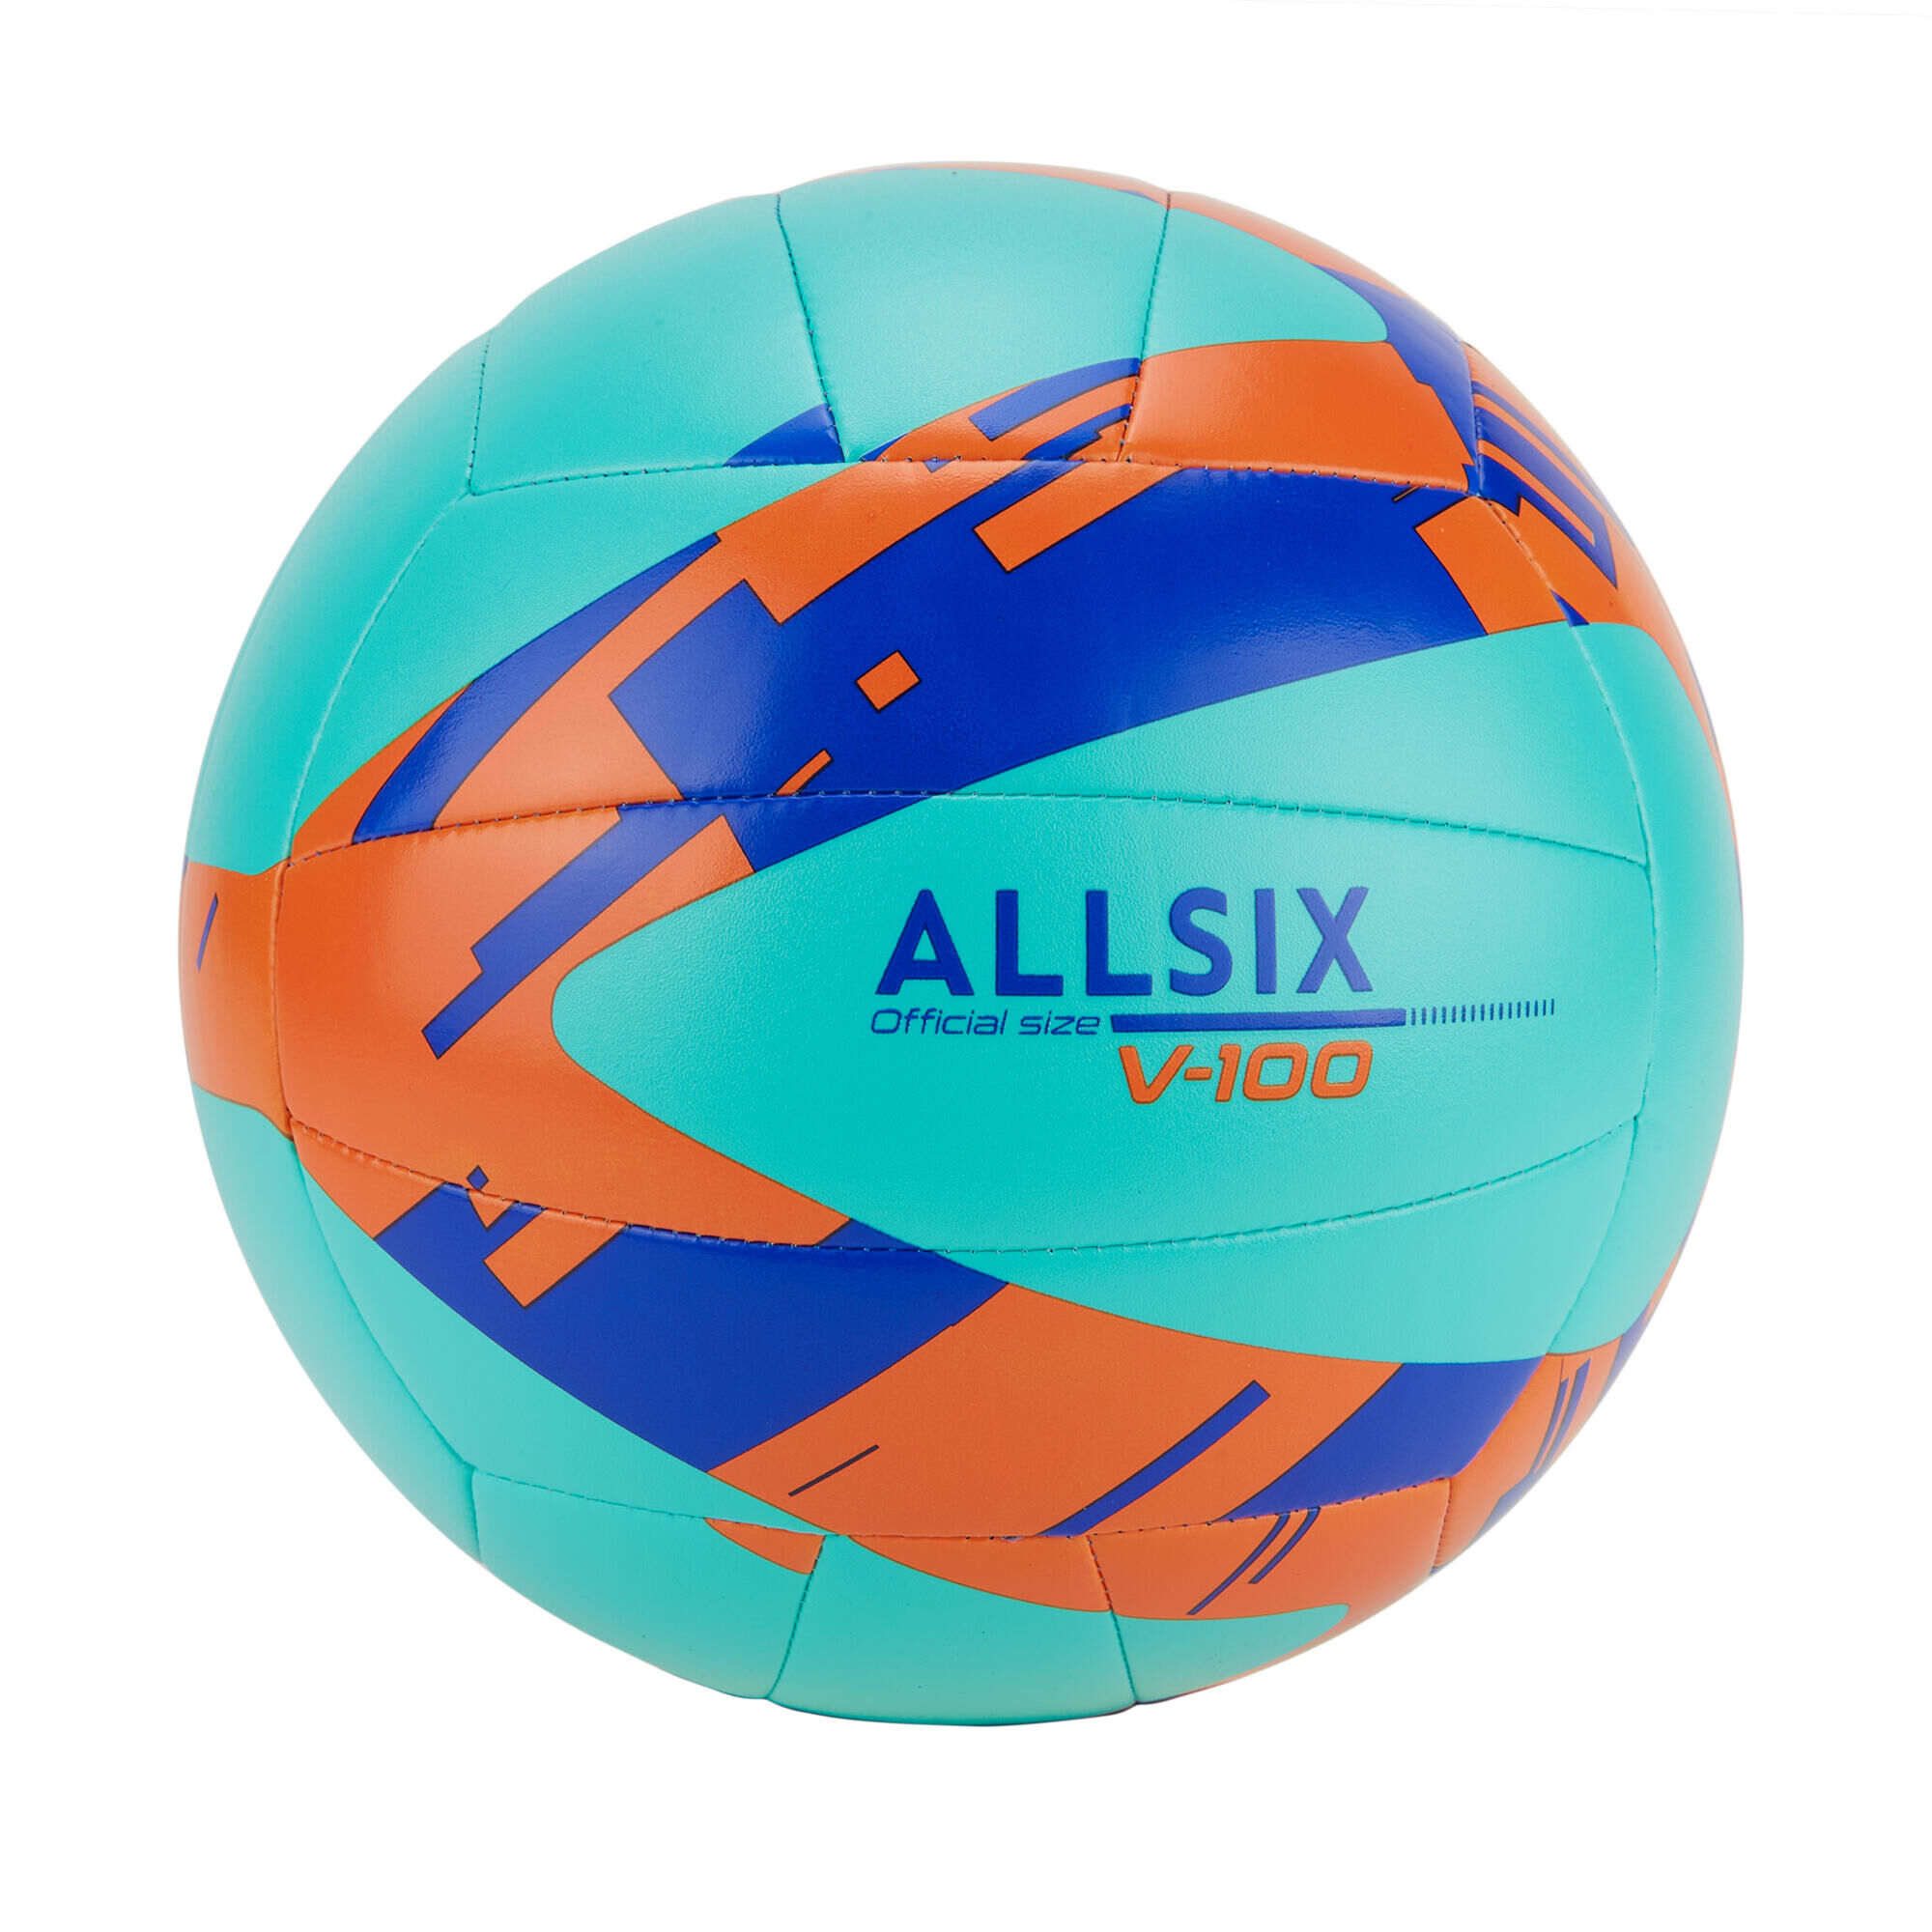 ALLSIX Starter Volleyball V100 - Turquoise Blue